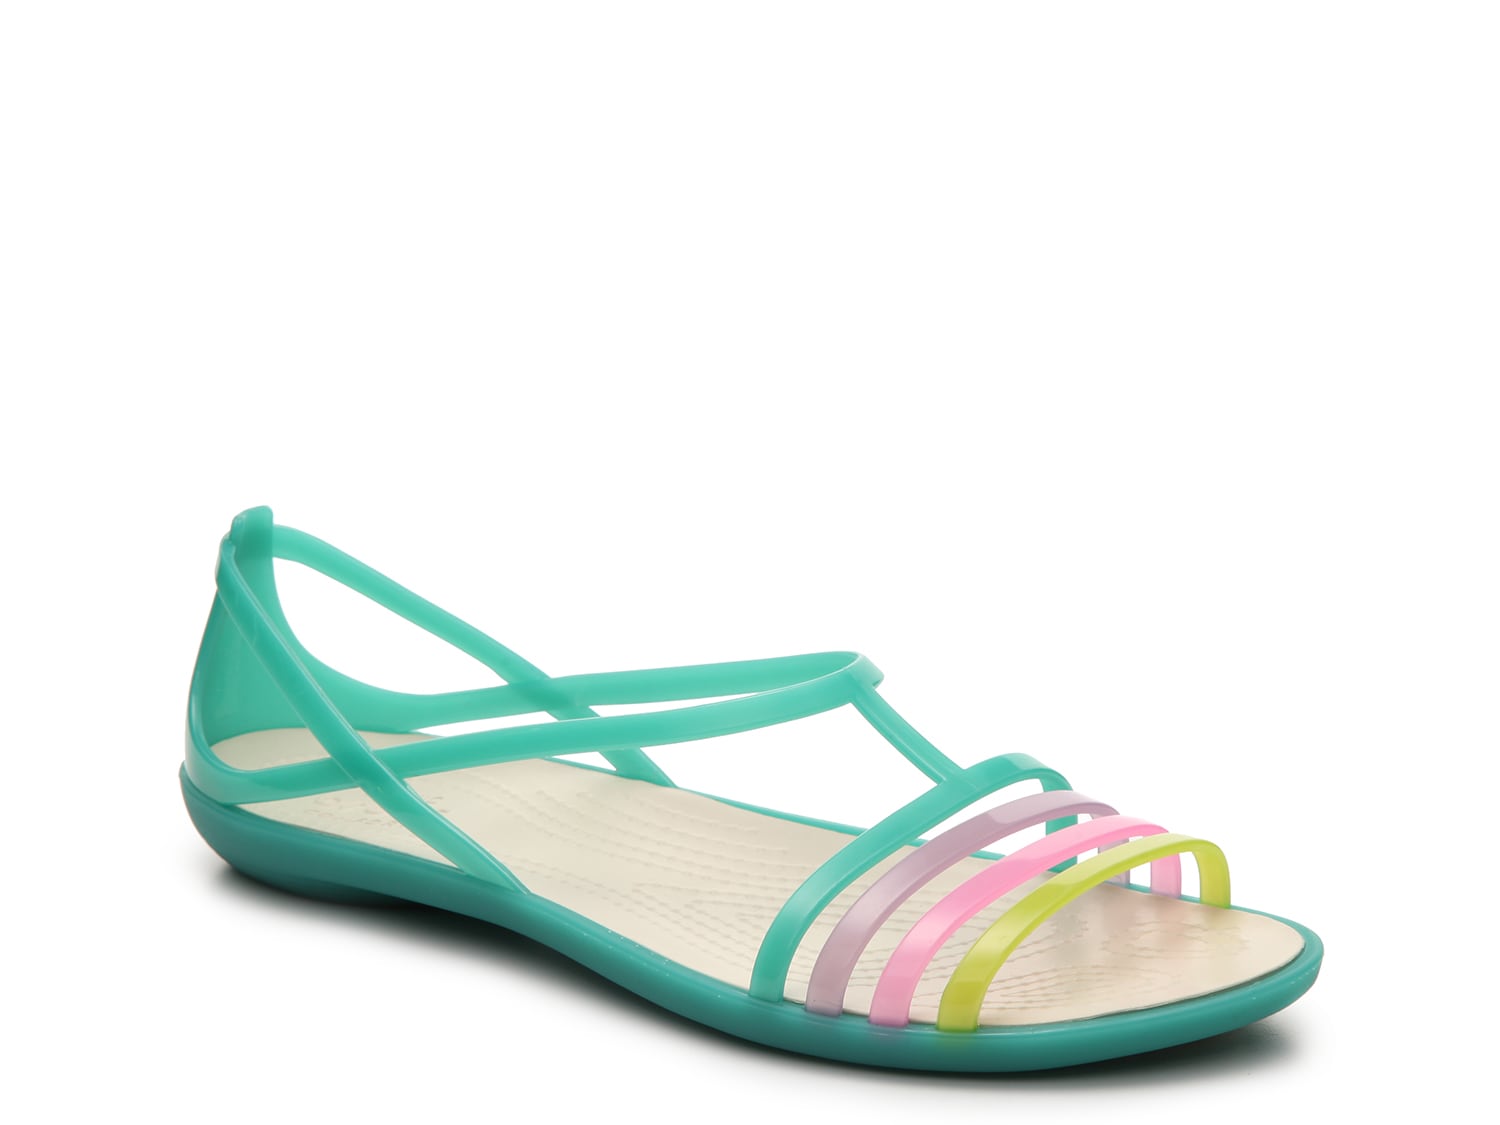 Crocs Isabella Multicolor Jelly Sandal - Women's Women's Shoes | DSW